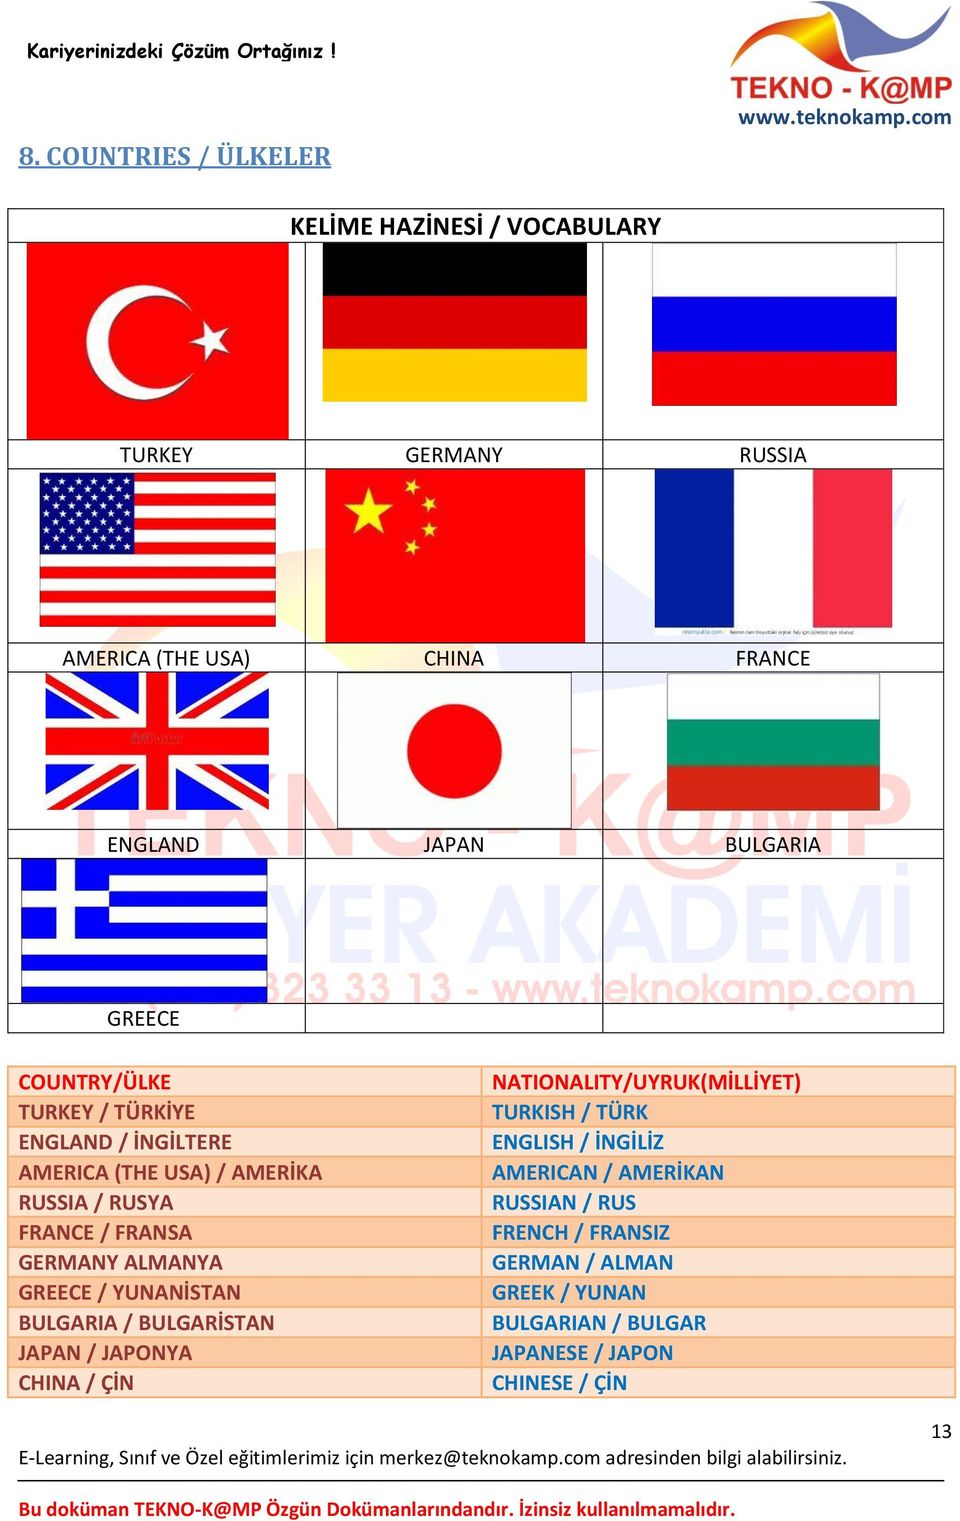 ALMANYA GREECE / YUNANİSTAN BULGARIA / BULGARİSTAN JAPAN / JAPONYA CHINA / ÇİN NATIONALITY/UYRUK(MİLLİYET) TURKISH / TÜRK ENGLISH